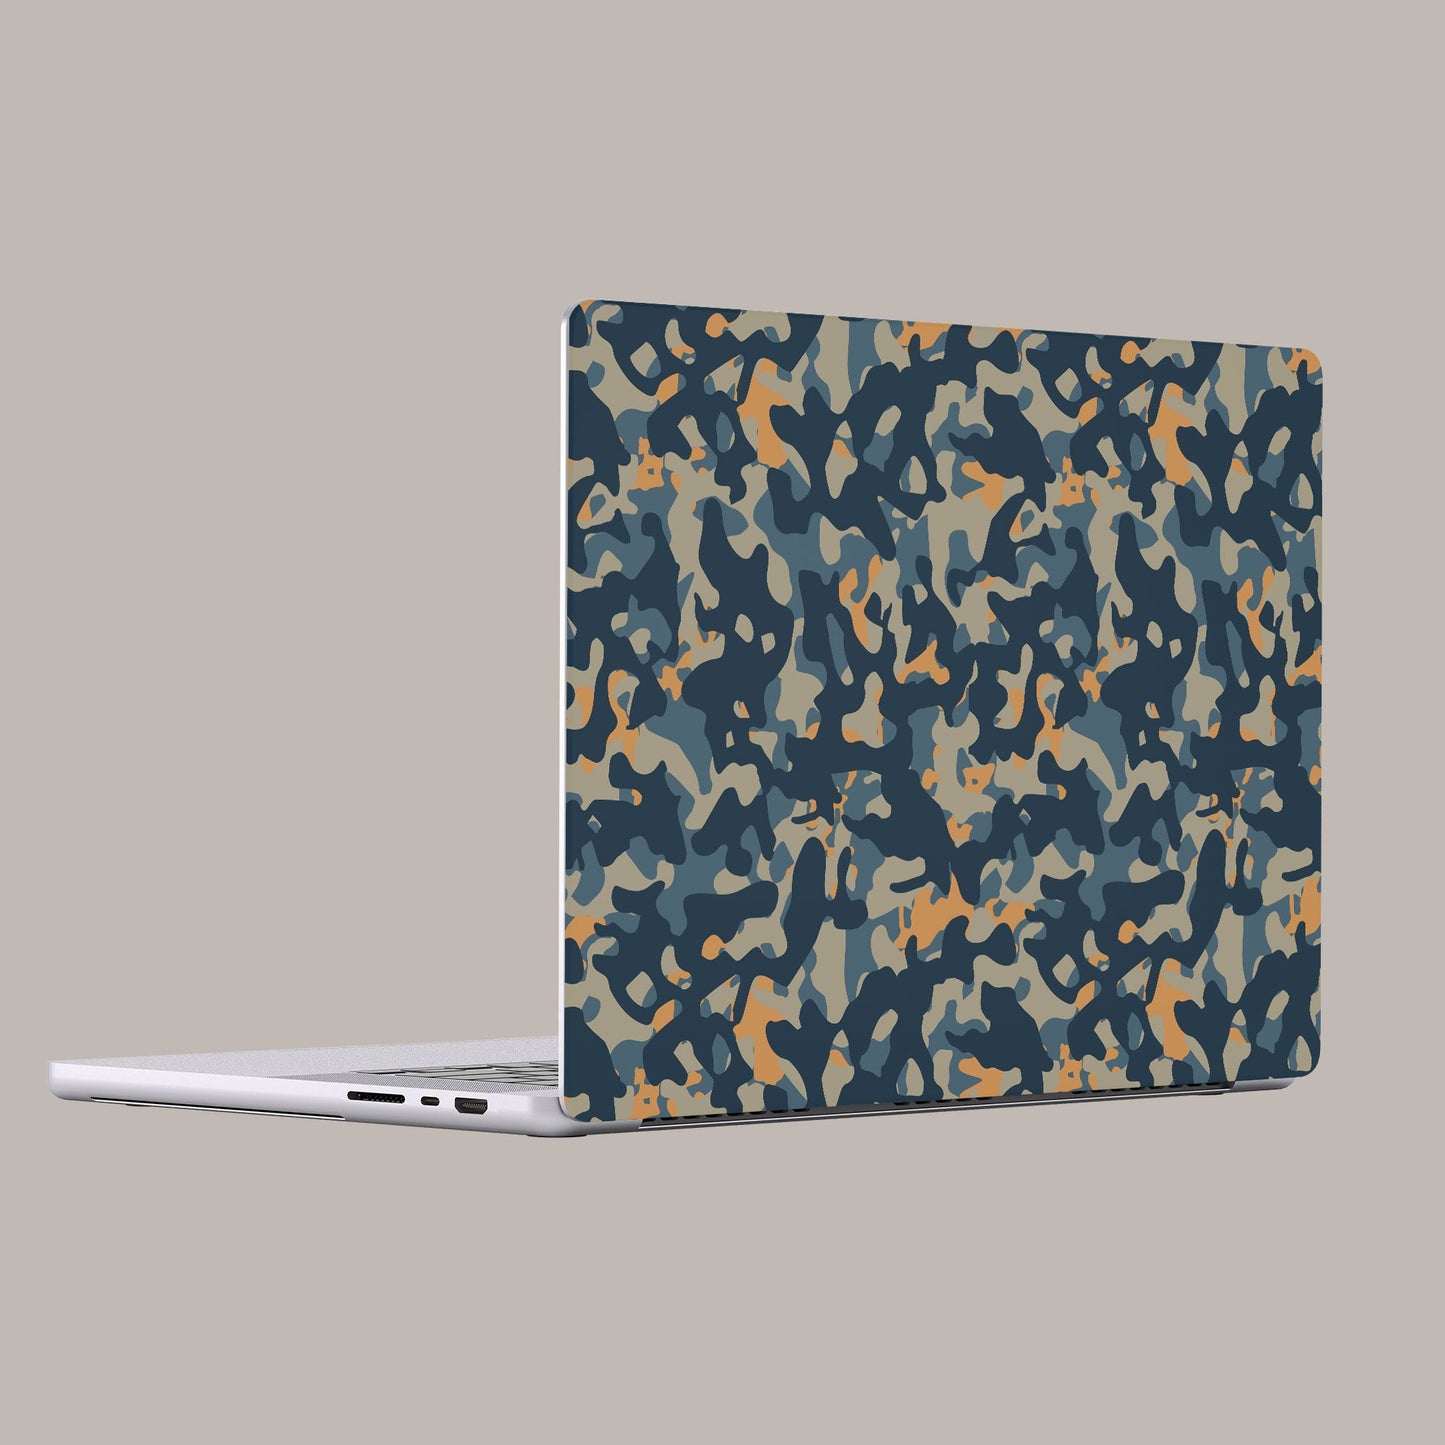 Wrapie Desert Army Camo Laptop Skin